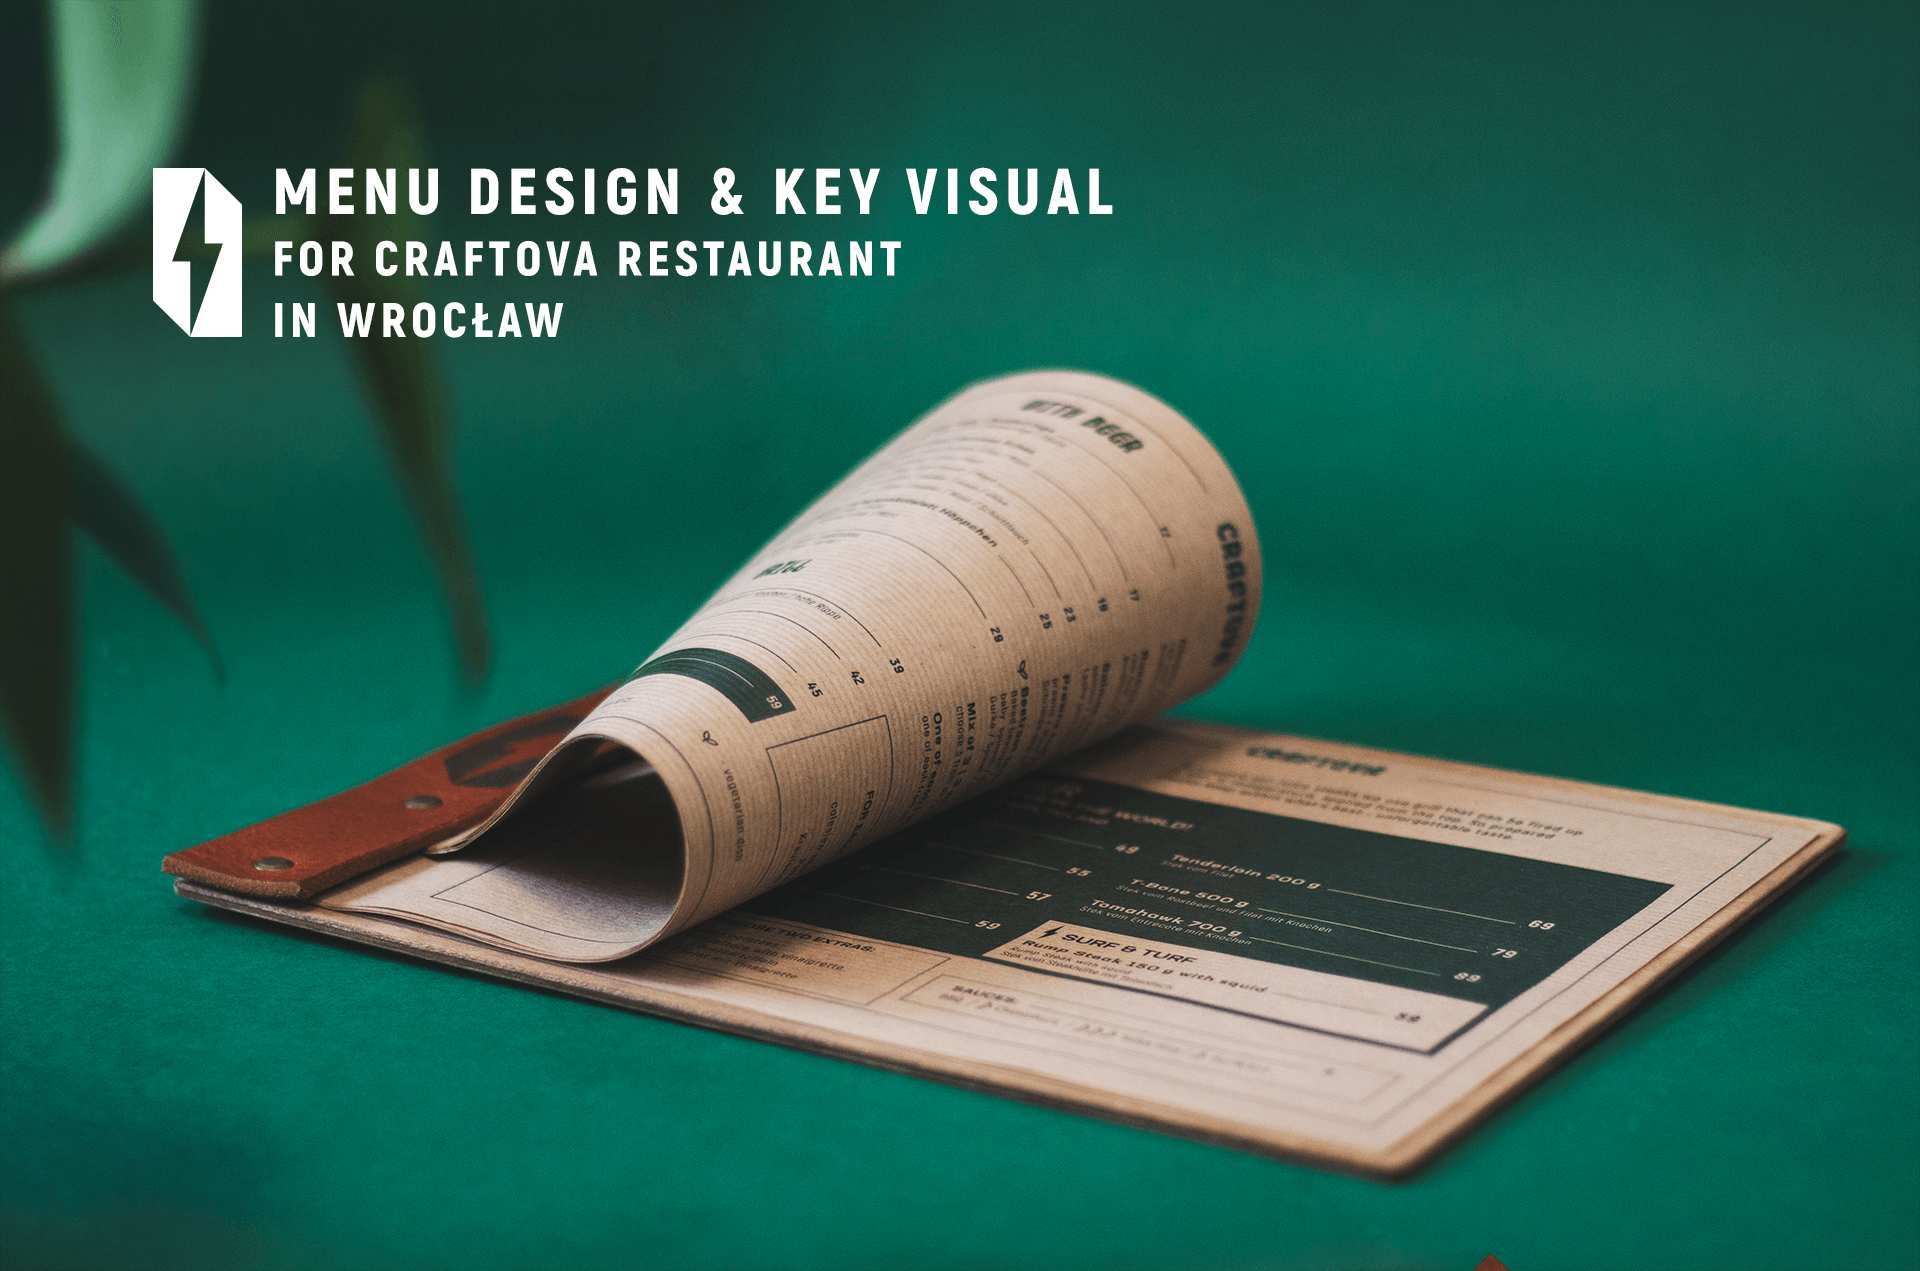 Craftova restaurant menu design